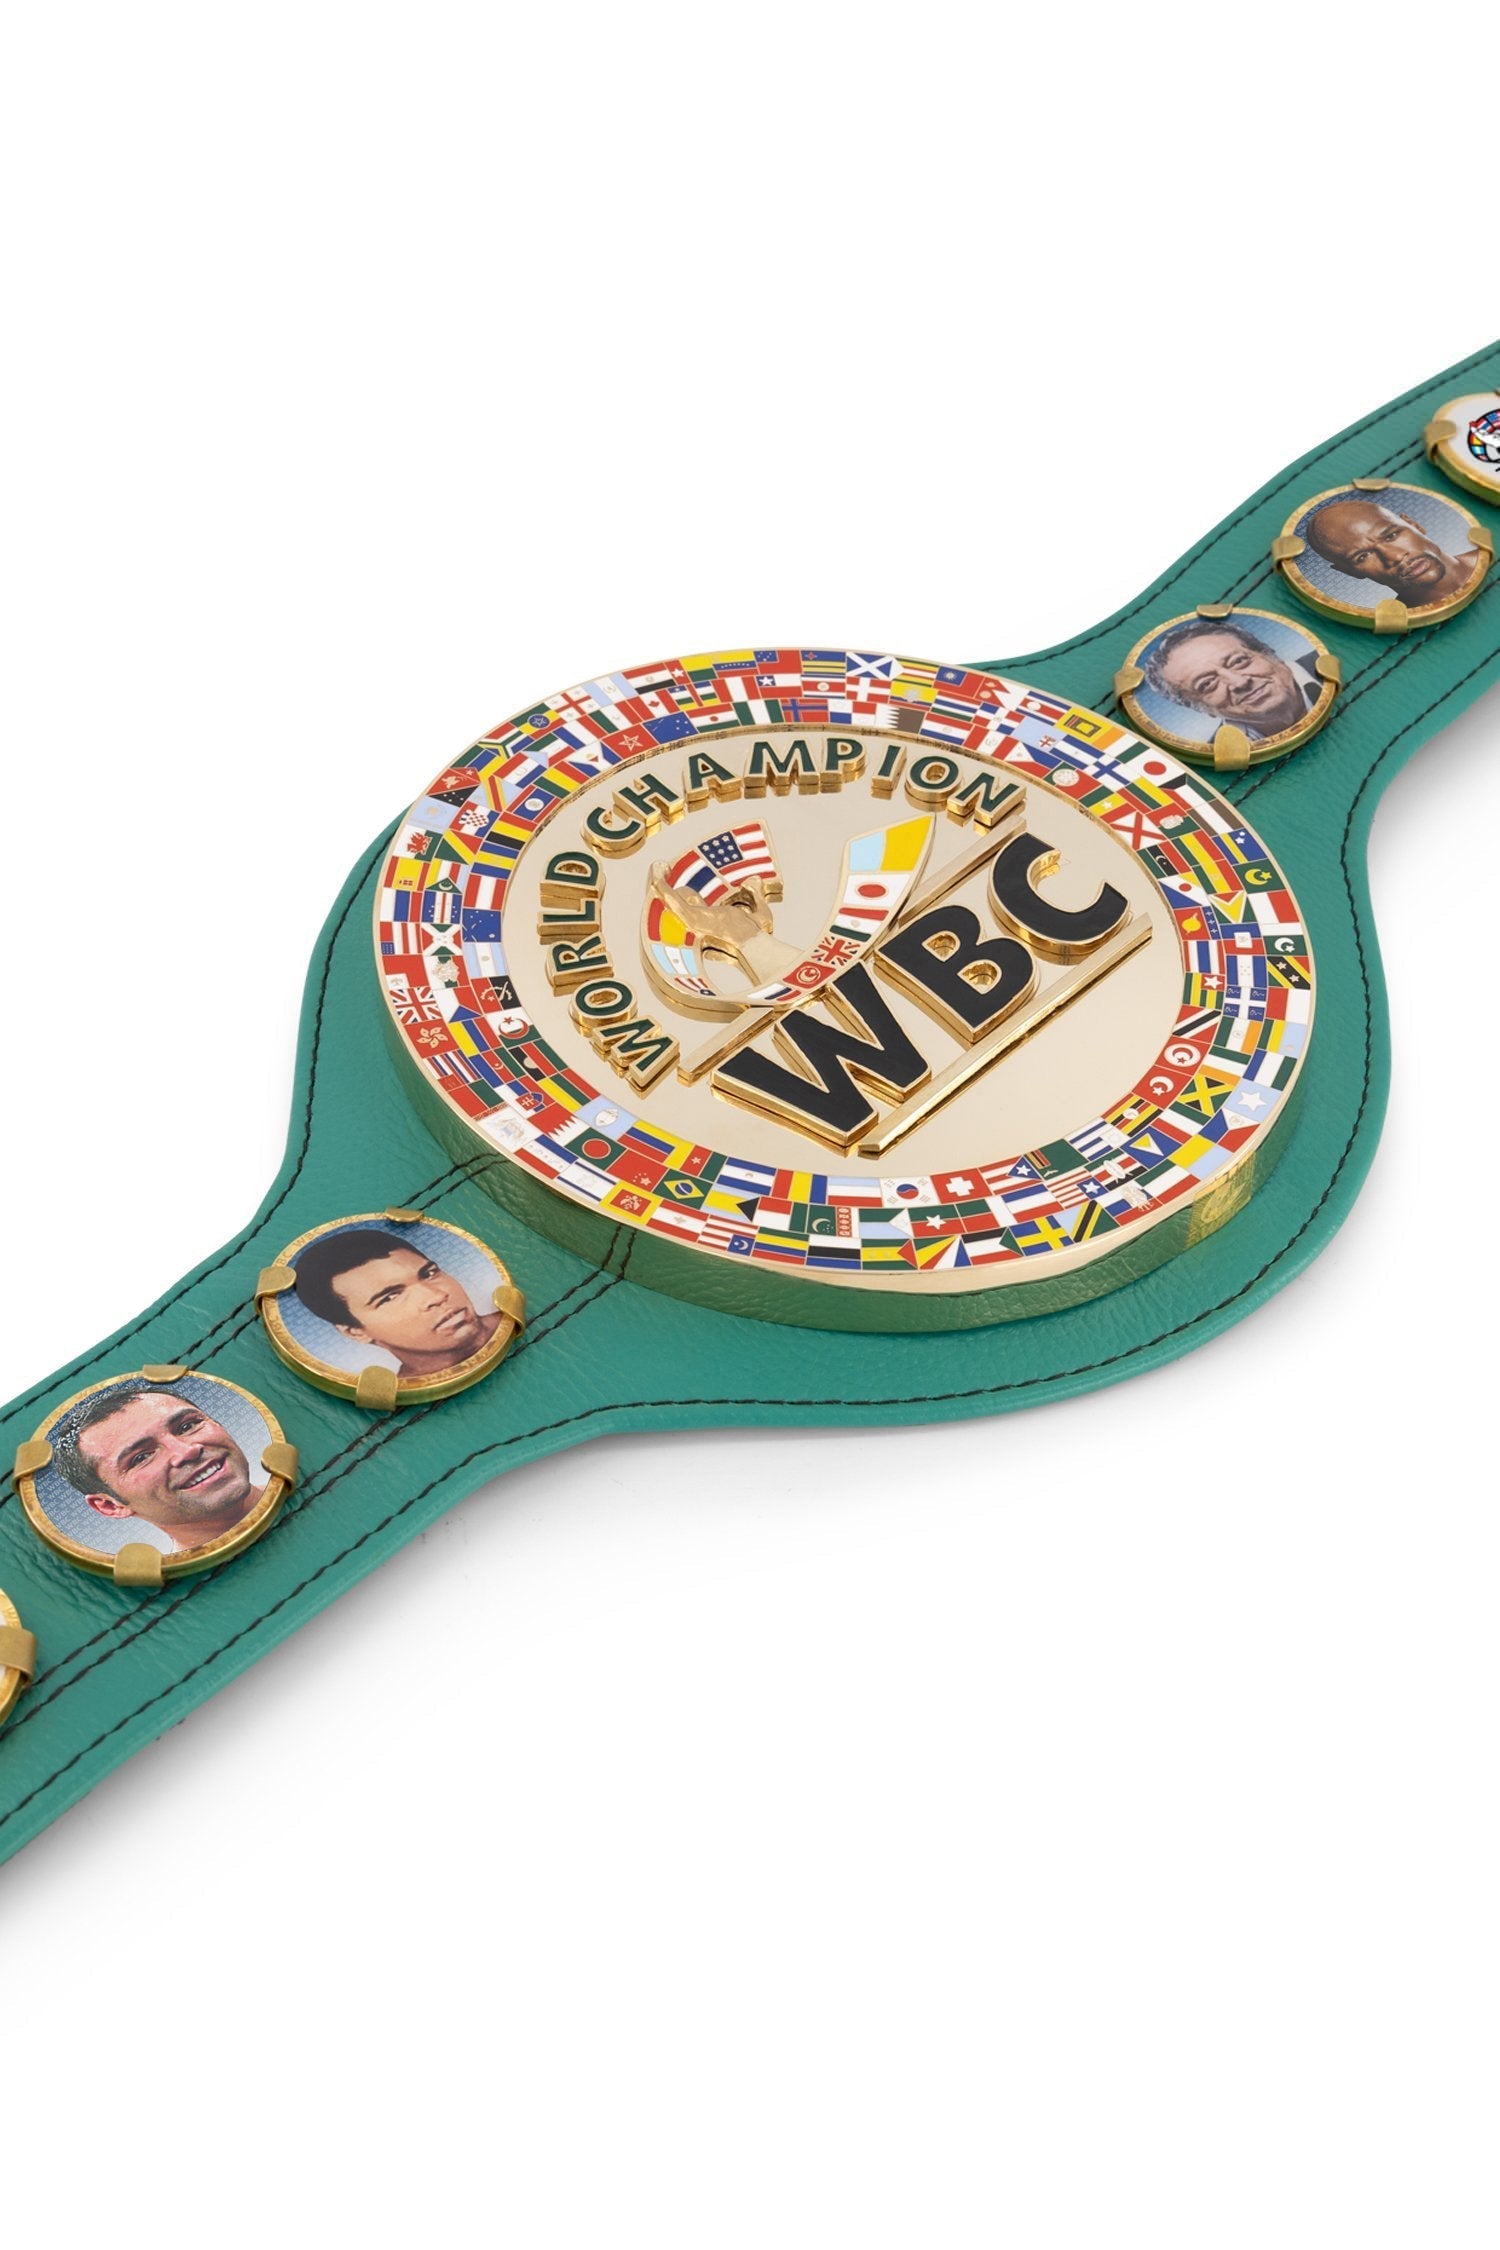 WBC Store WBC - Championship Belt  "Historic Fights" Oscar de la Hoya vs. Floyd Mayweather